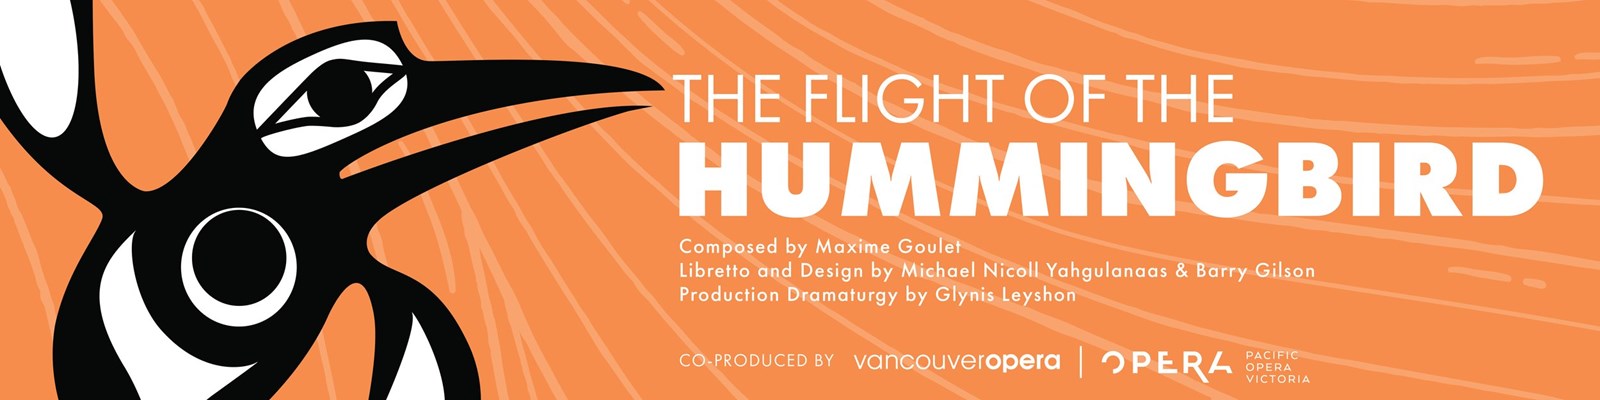 Hummingbird+1080+Graphic-Orange-Text.jpg